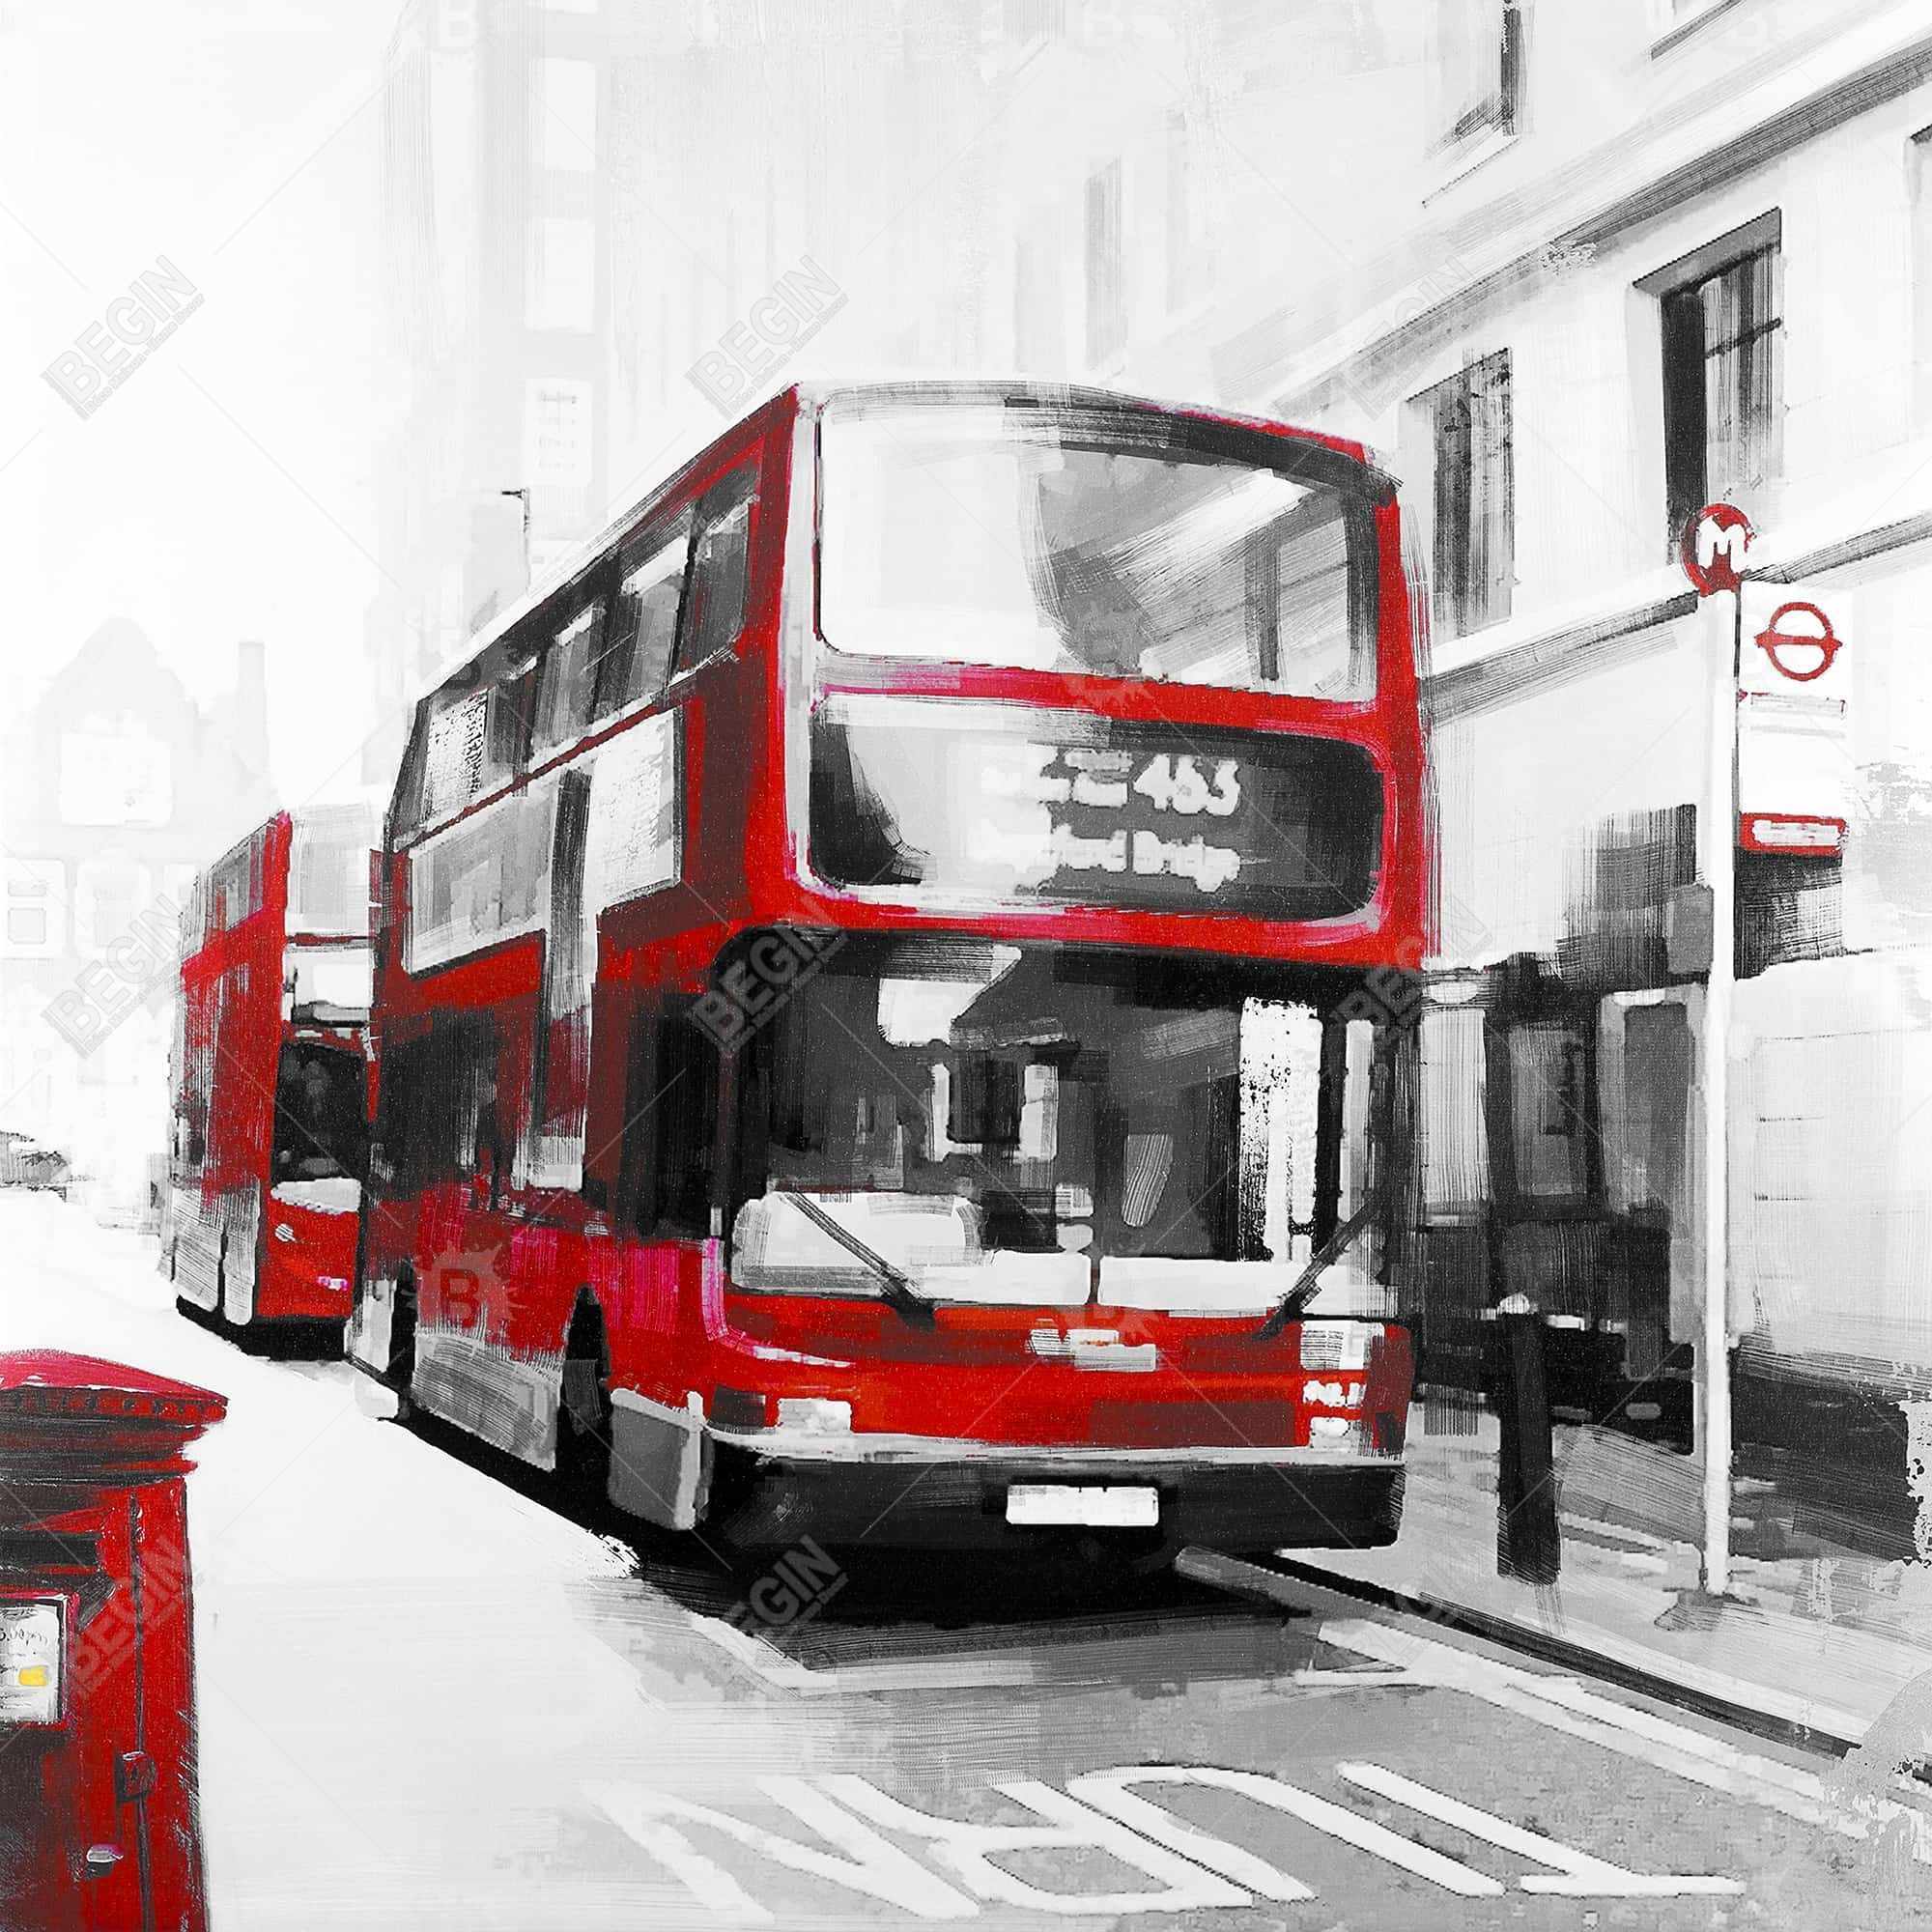 Red bus londoner